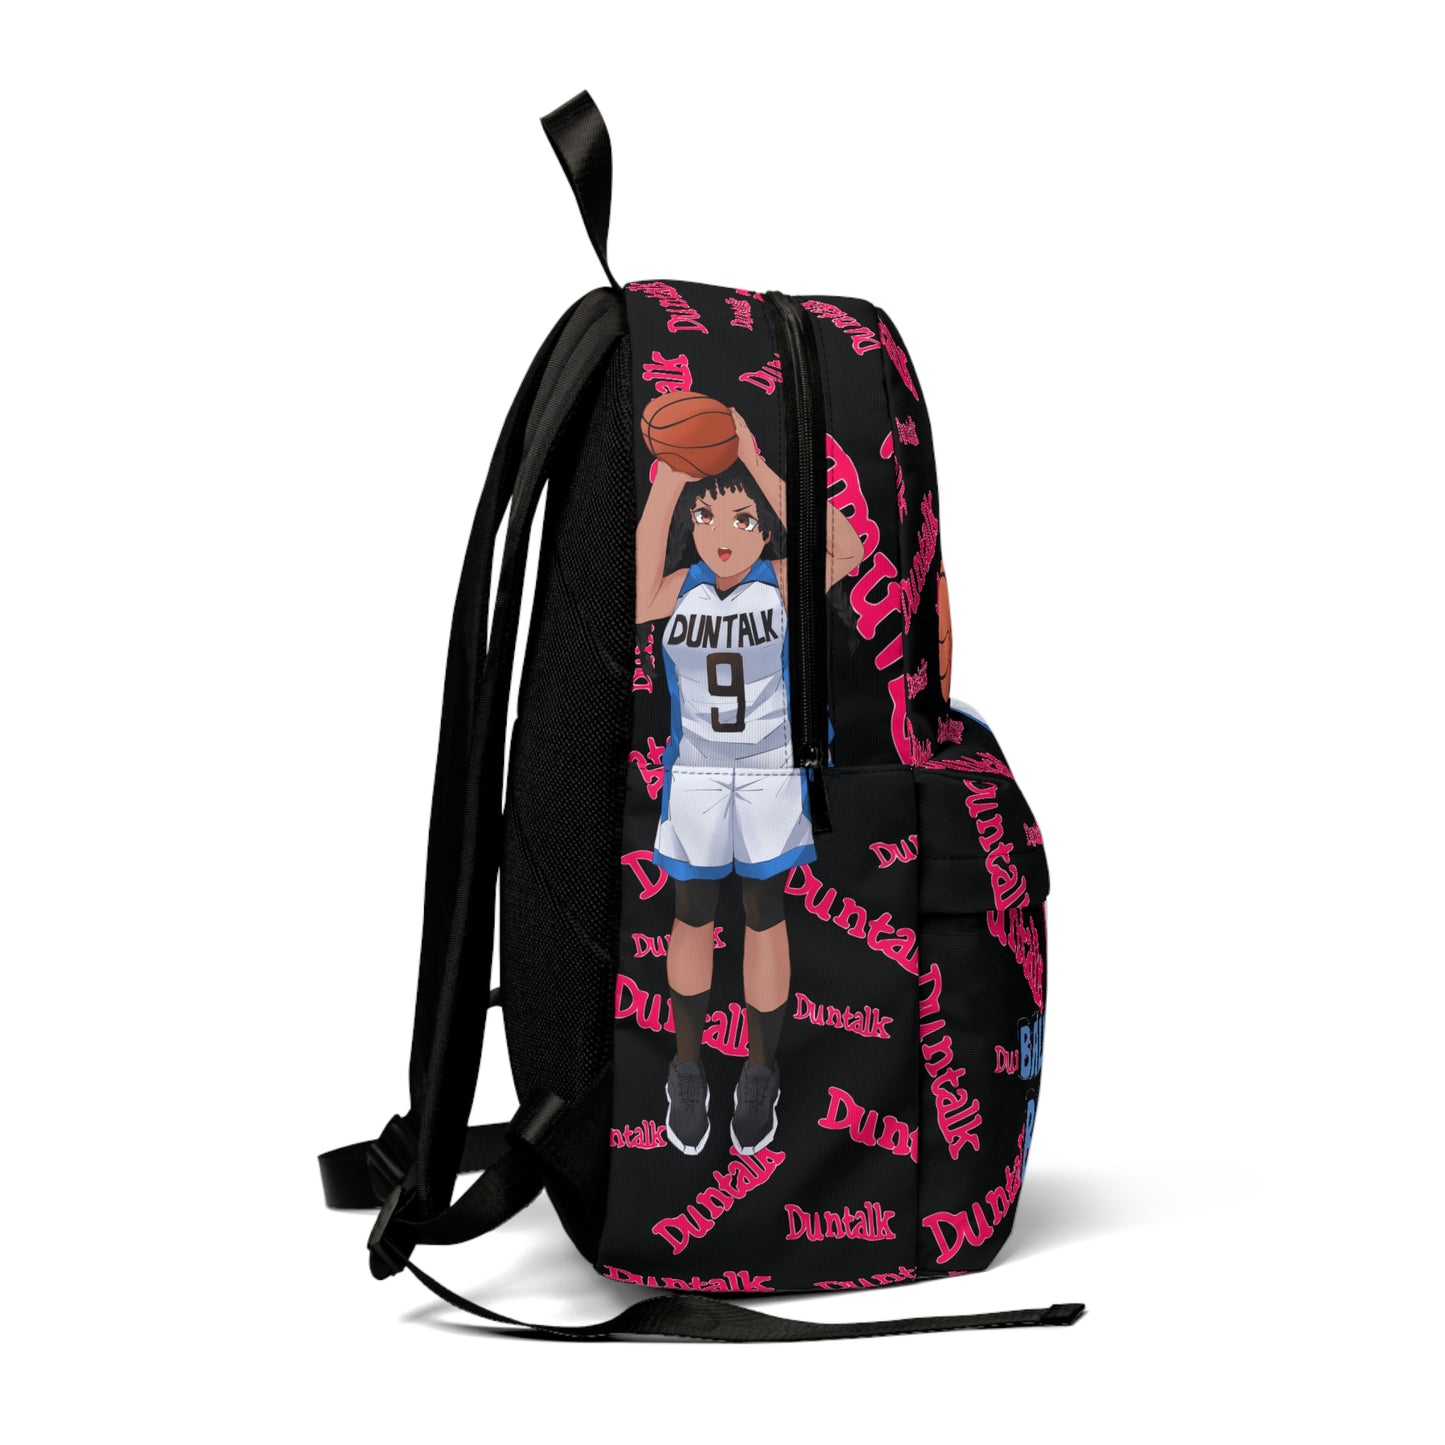 Duntalk "Squad" Girl's Basketball Backpack Large